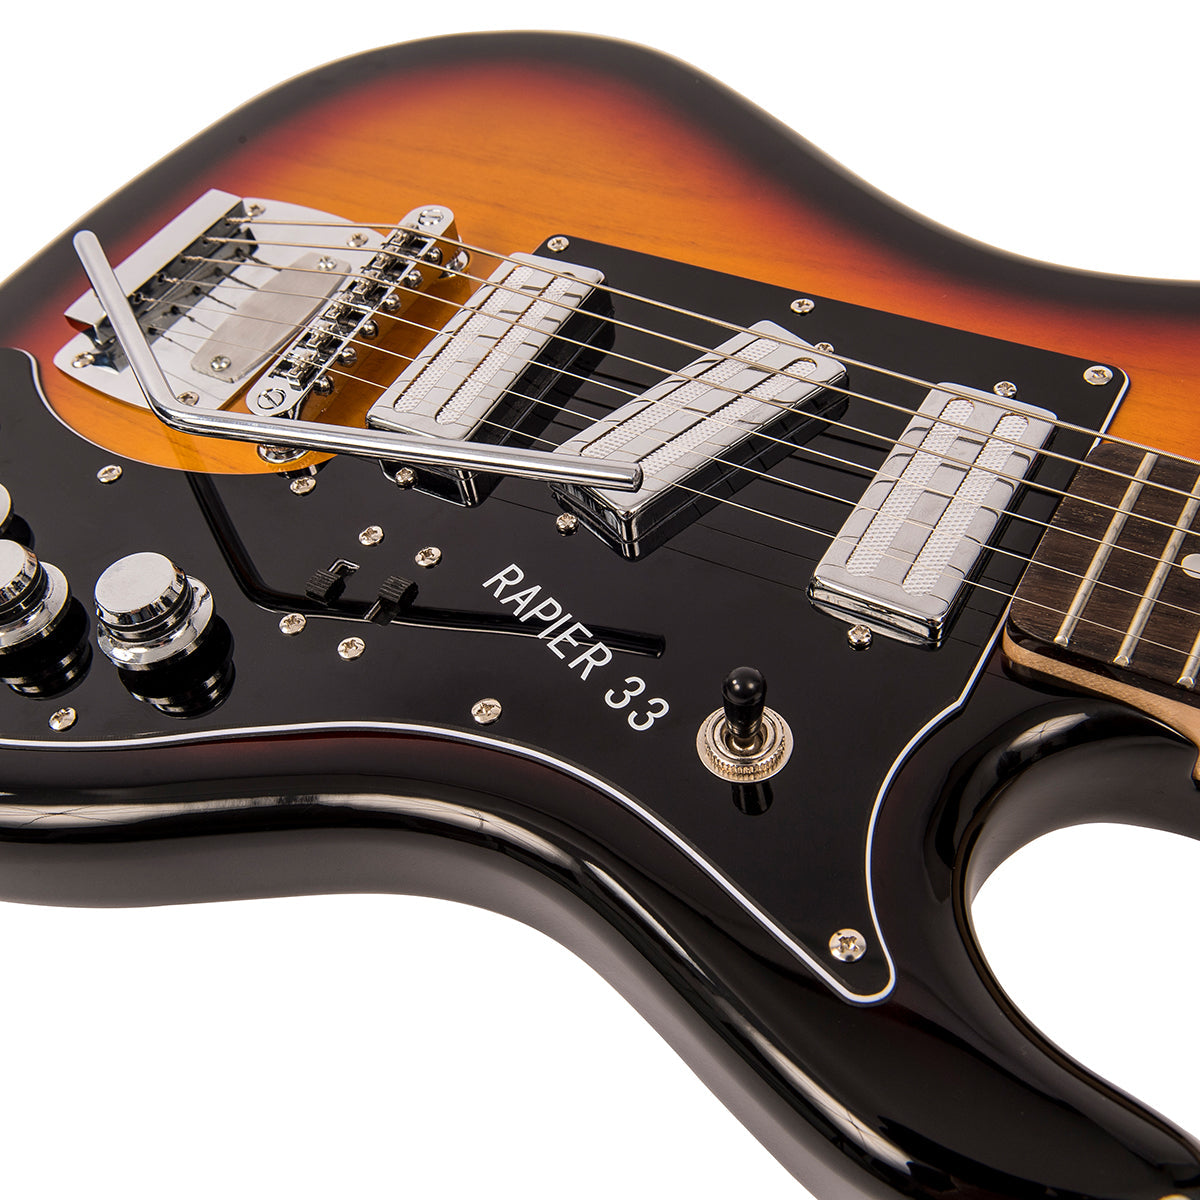 Rapier 33 Electric Guitar ~ 3 Tone Sunburst, Electric Guitar for sale at Richards Guitars.